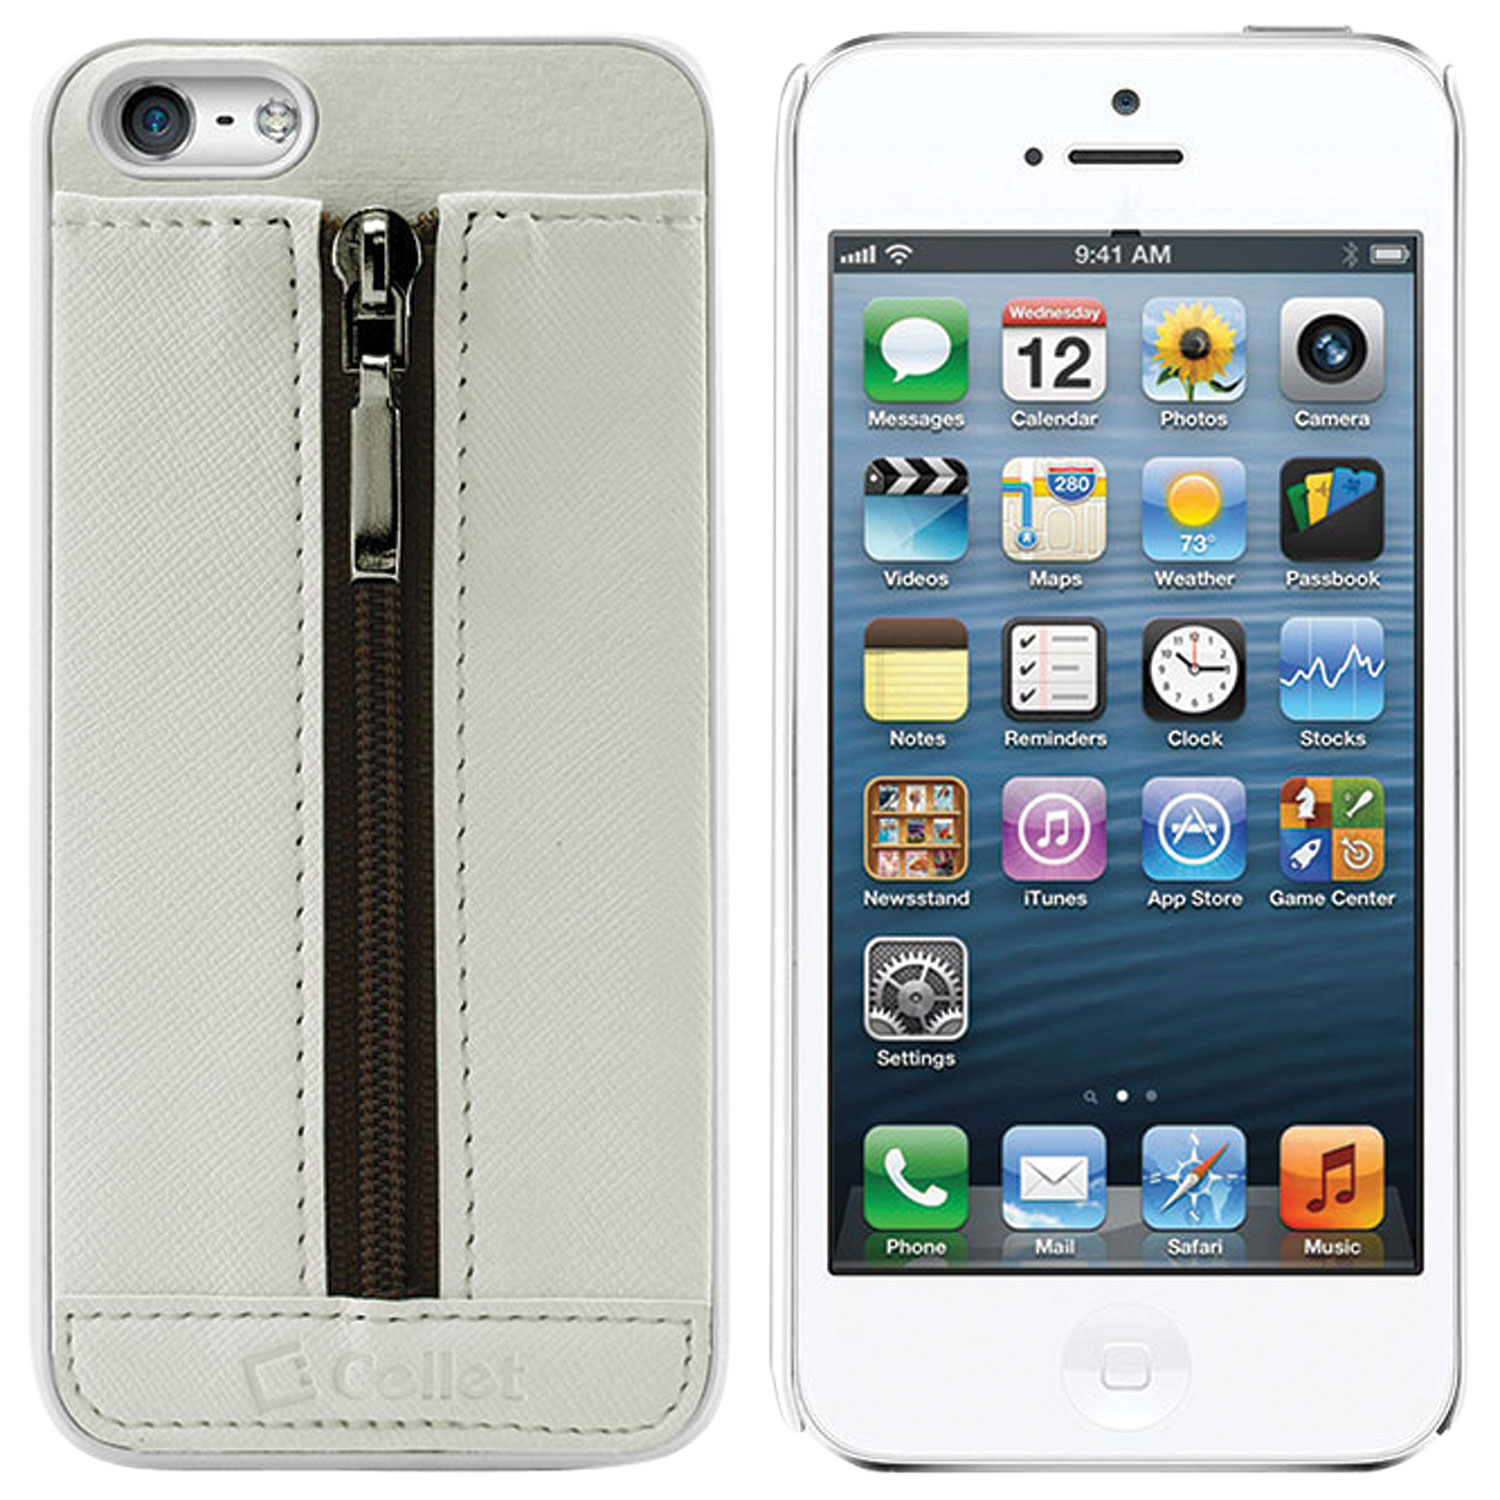 Cellet Zipper iPhone 5/5s Soft Shell Case - White